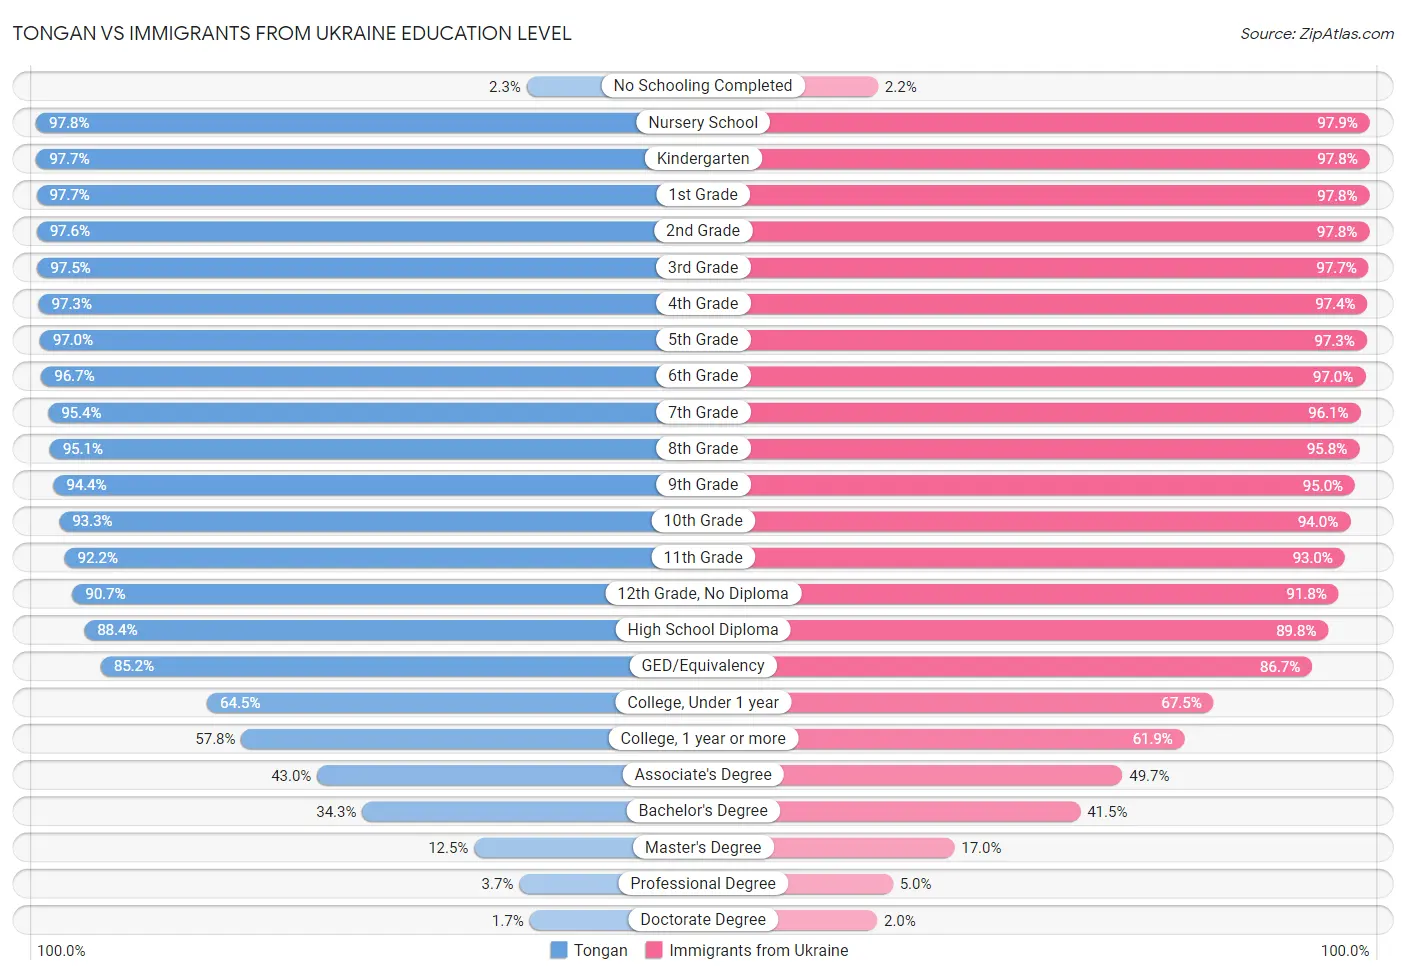 Tongan vs Immigrants from Ukraine Education Level